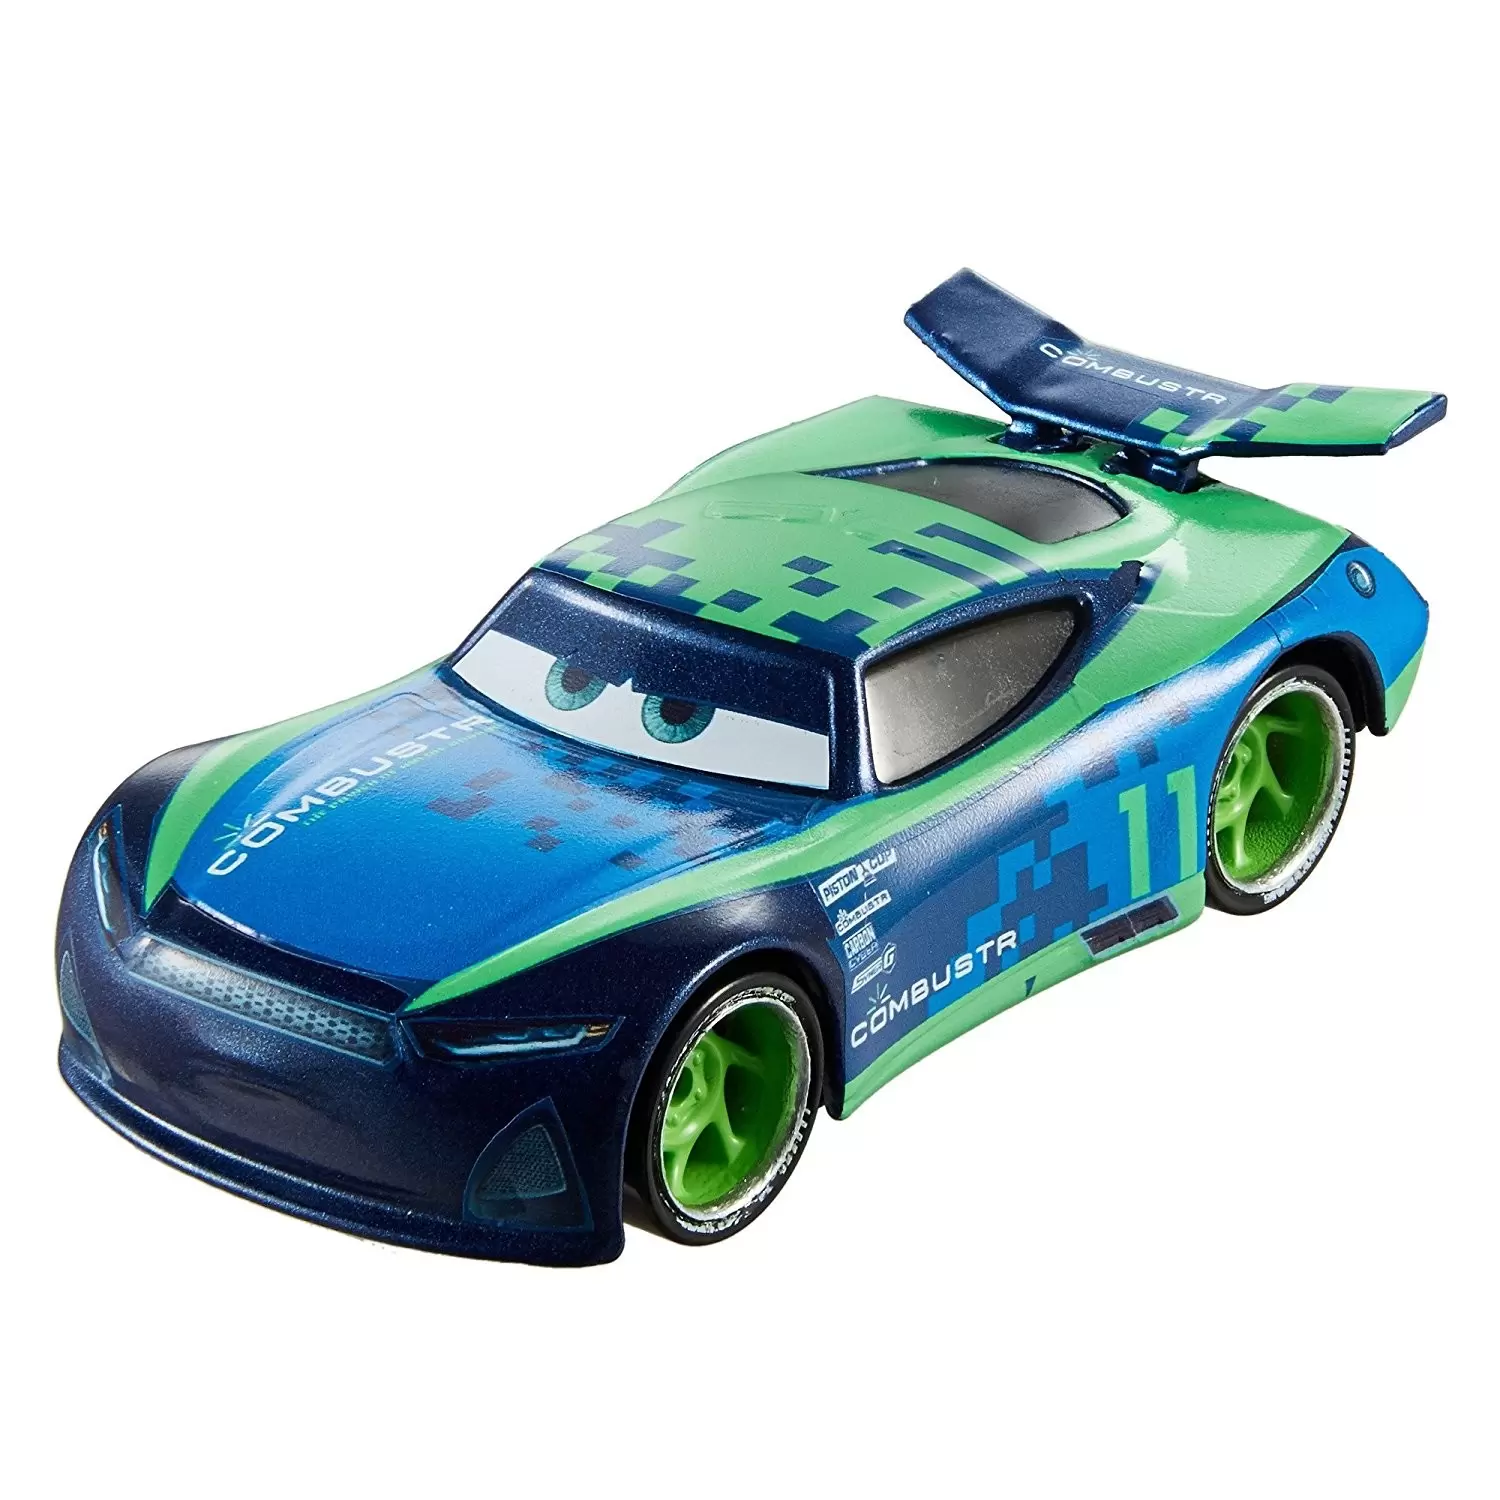 Cars 3 models - Disney Cars Die Cast Next Gen Combustr Toy Vehicle